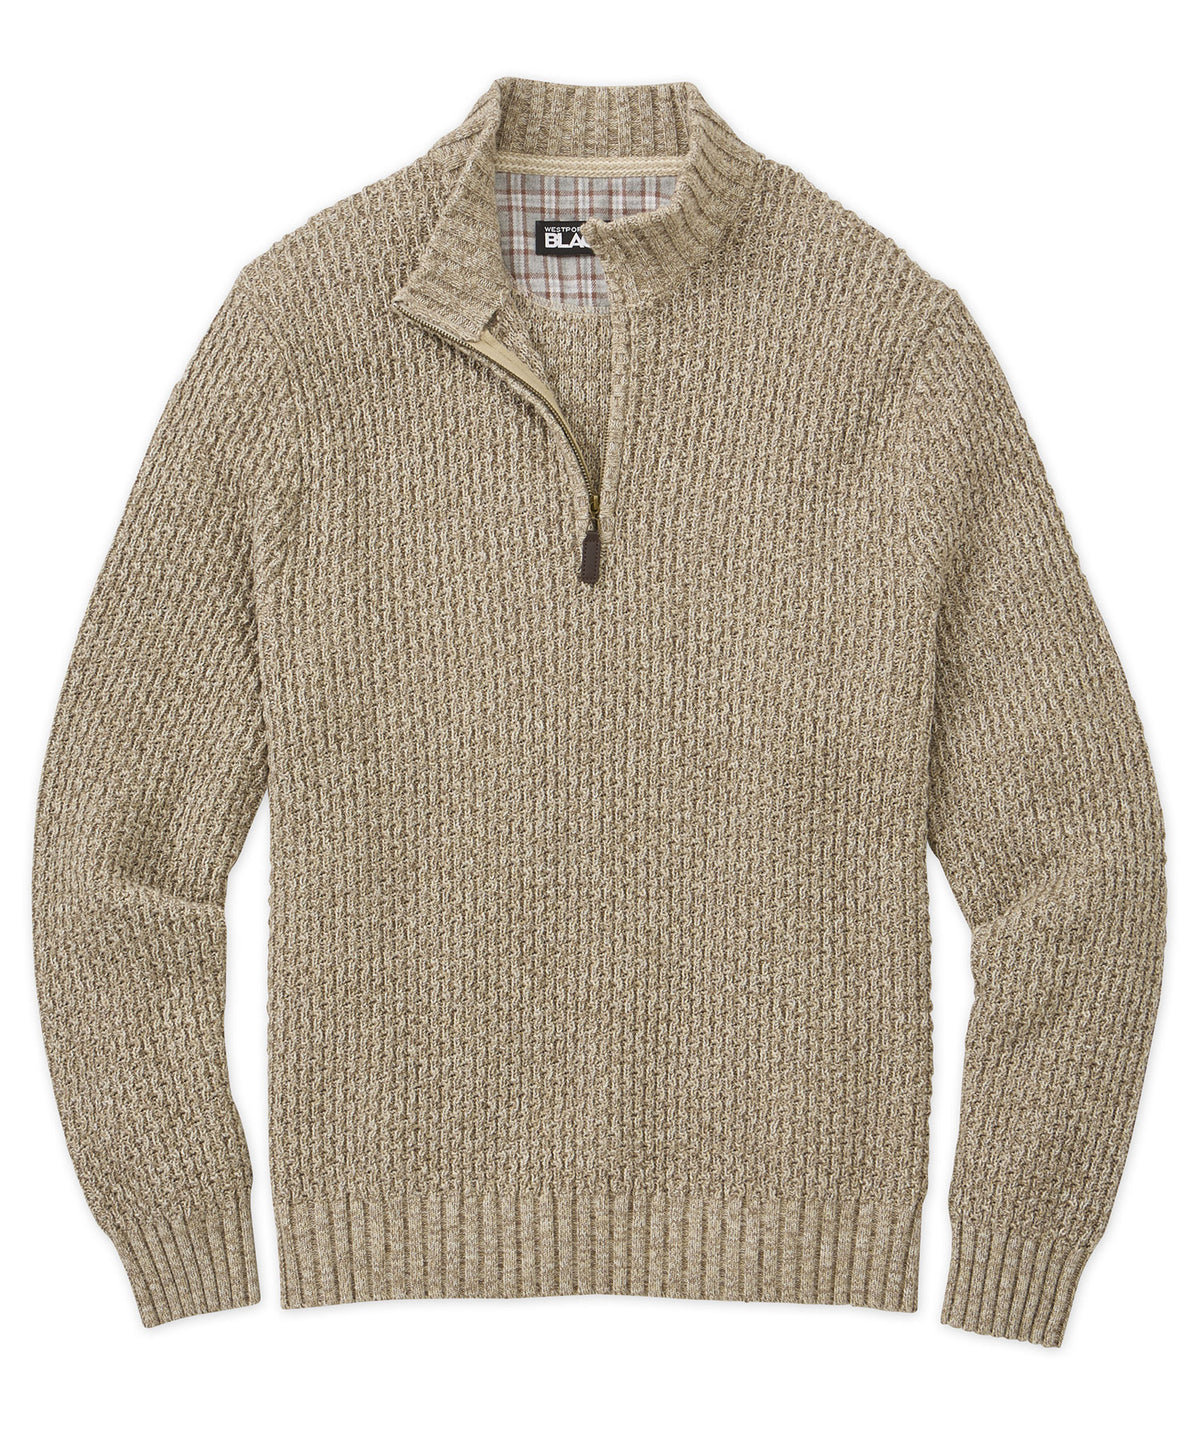 Westport Black Tri Color Quarter-Zip Sweater, Big & Tall